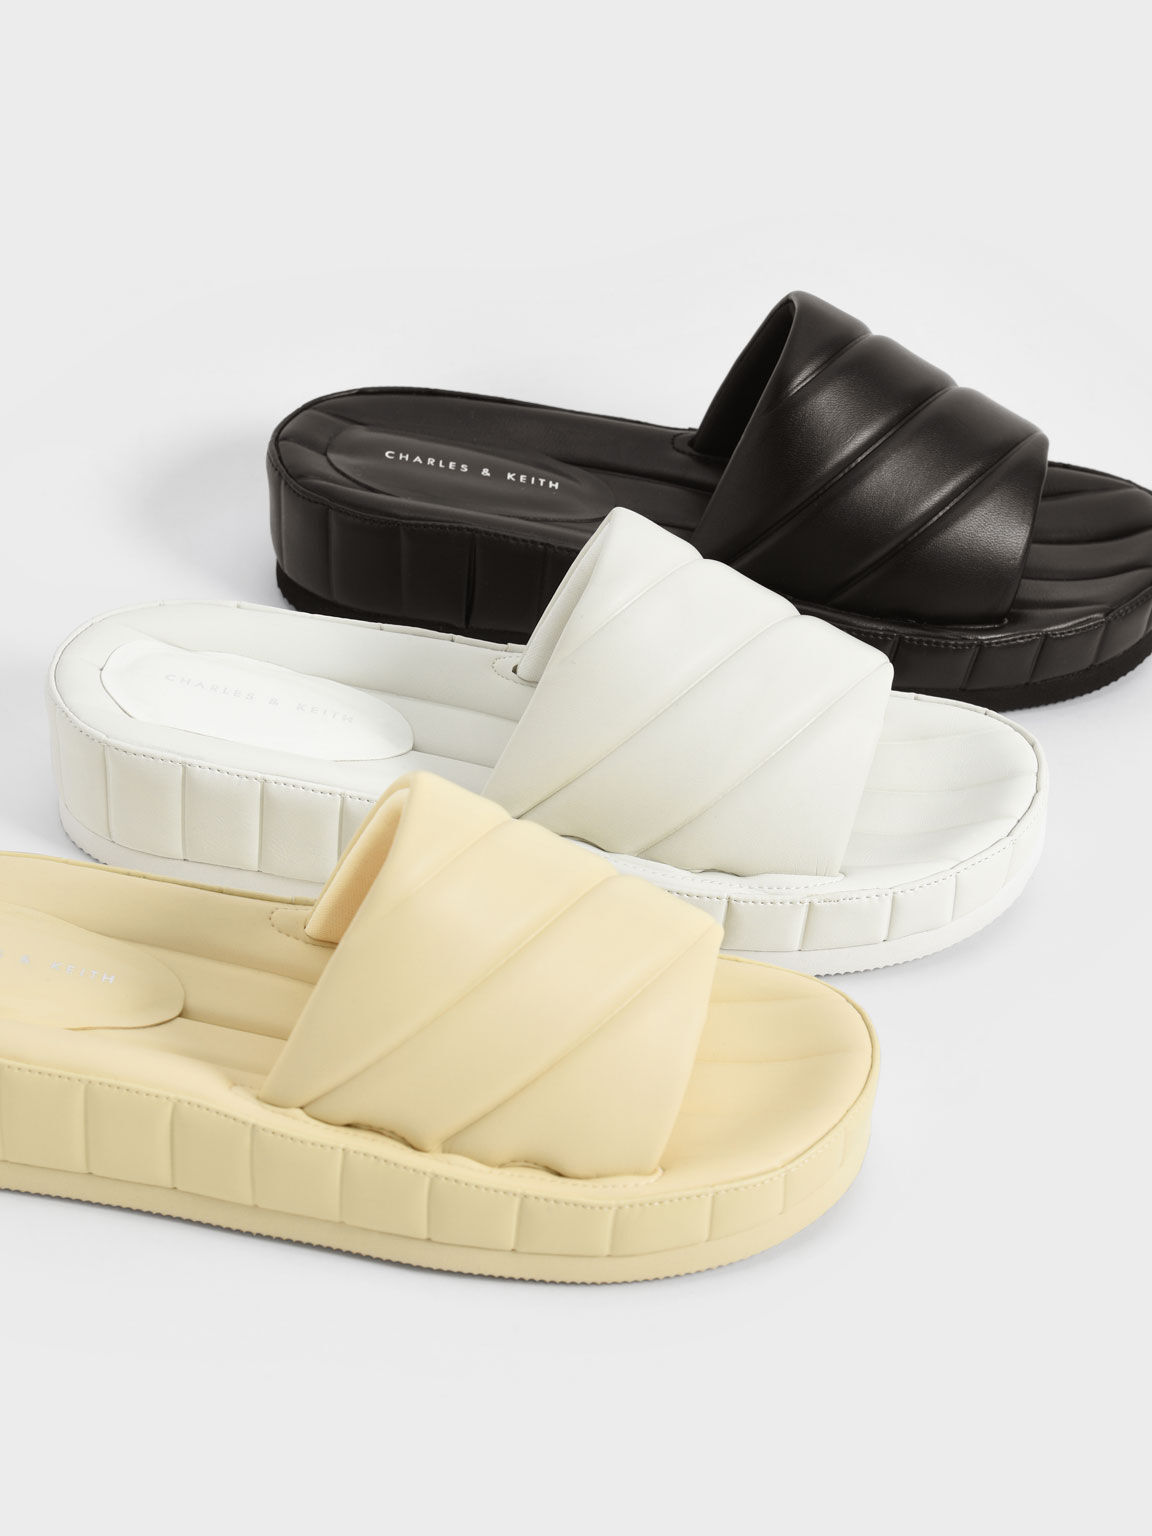 Puffy Flatform Slide Sandals, Yellow, hi-res